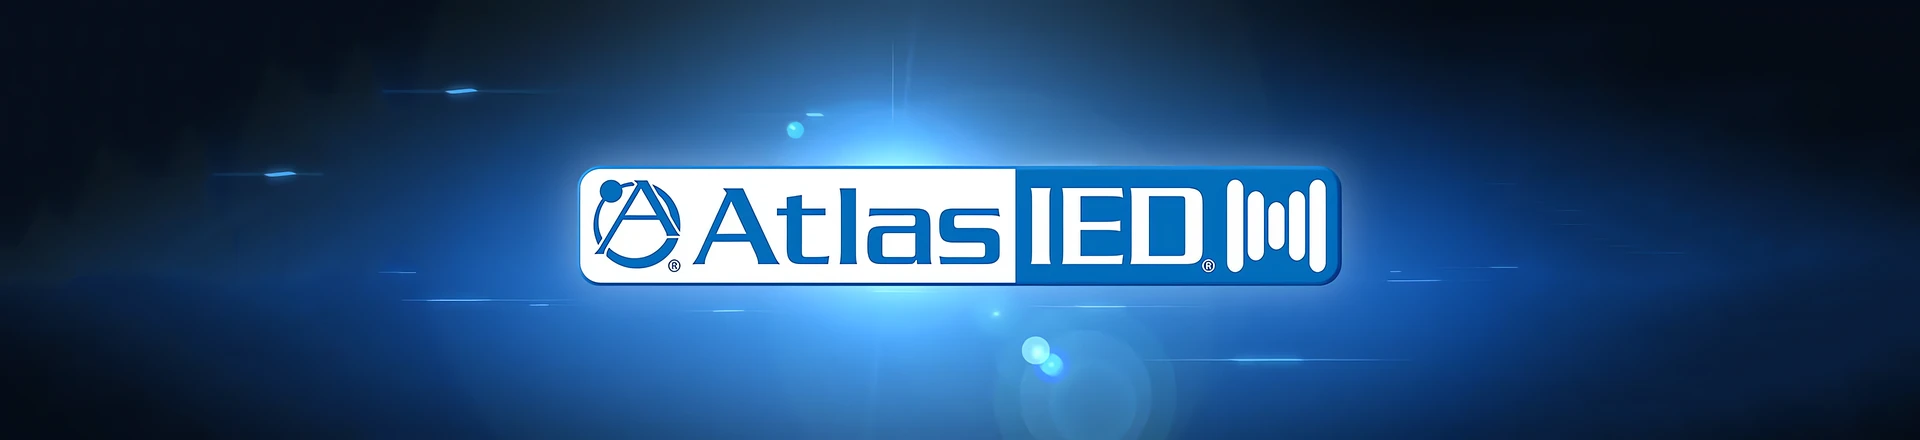 Lauda Audio polskim dystrybutorem AtlasIED